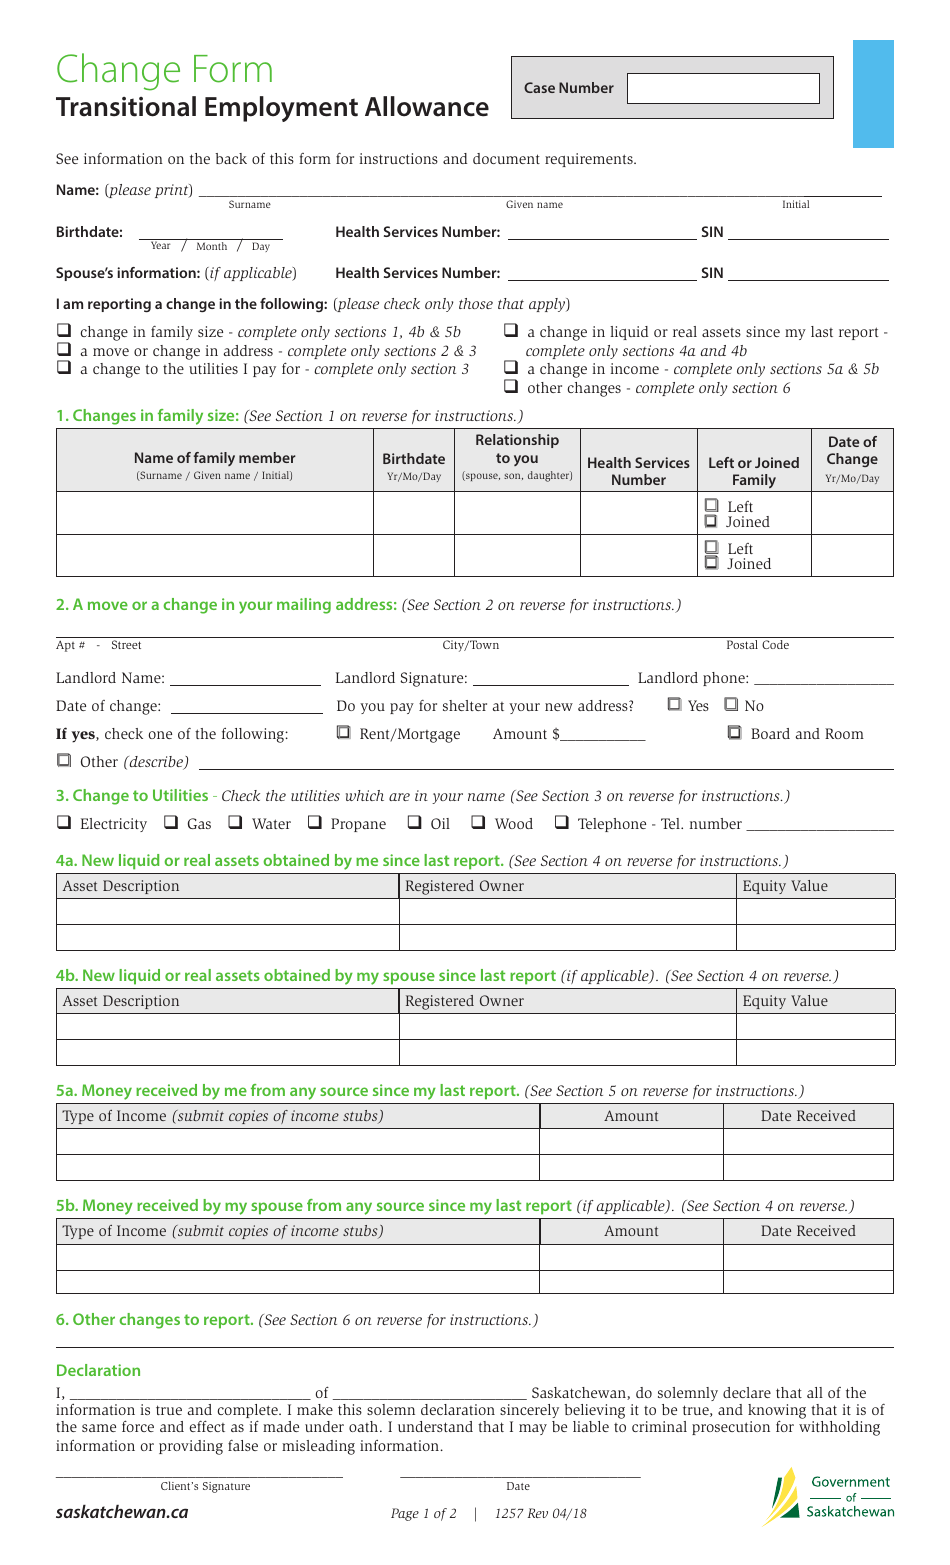 Form 1257 Transitional Employment Allowance Change Form - Saskatchewan, Canada, Page 1